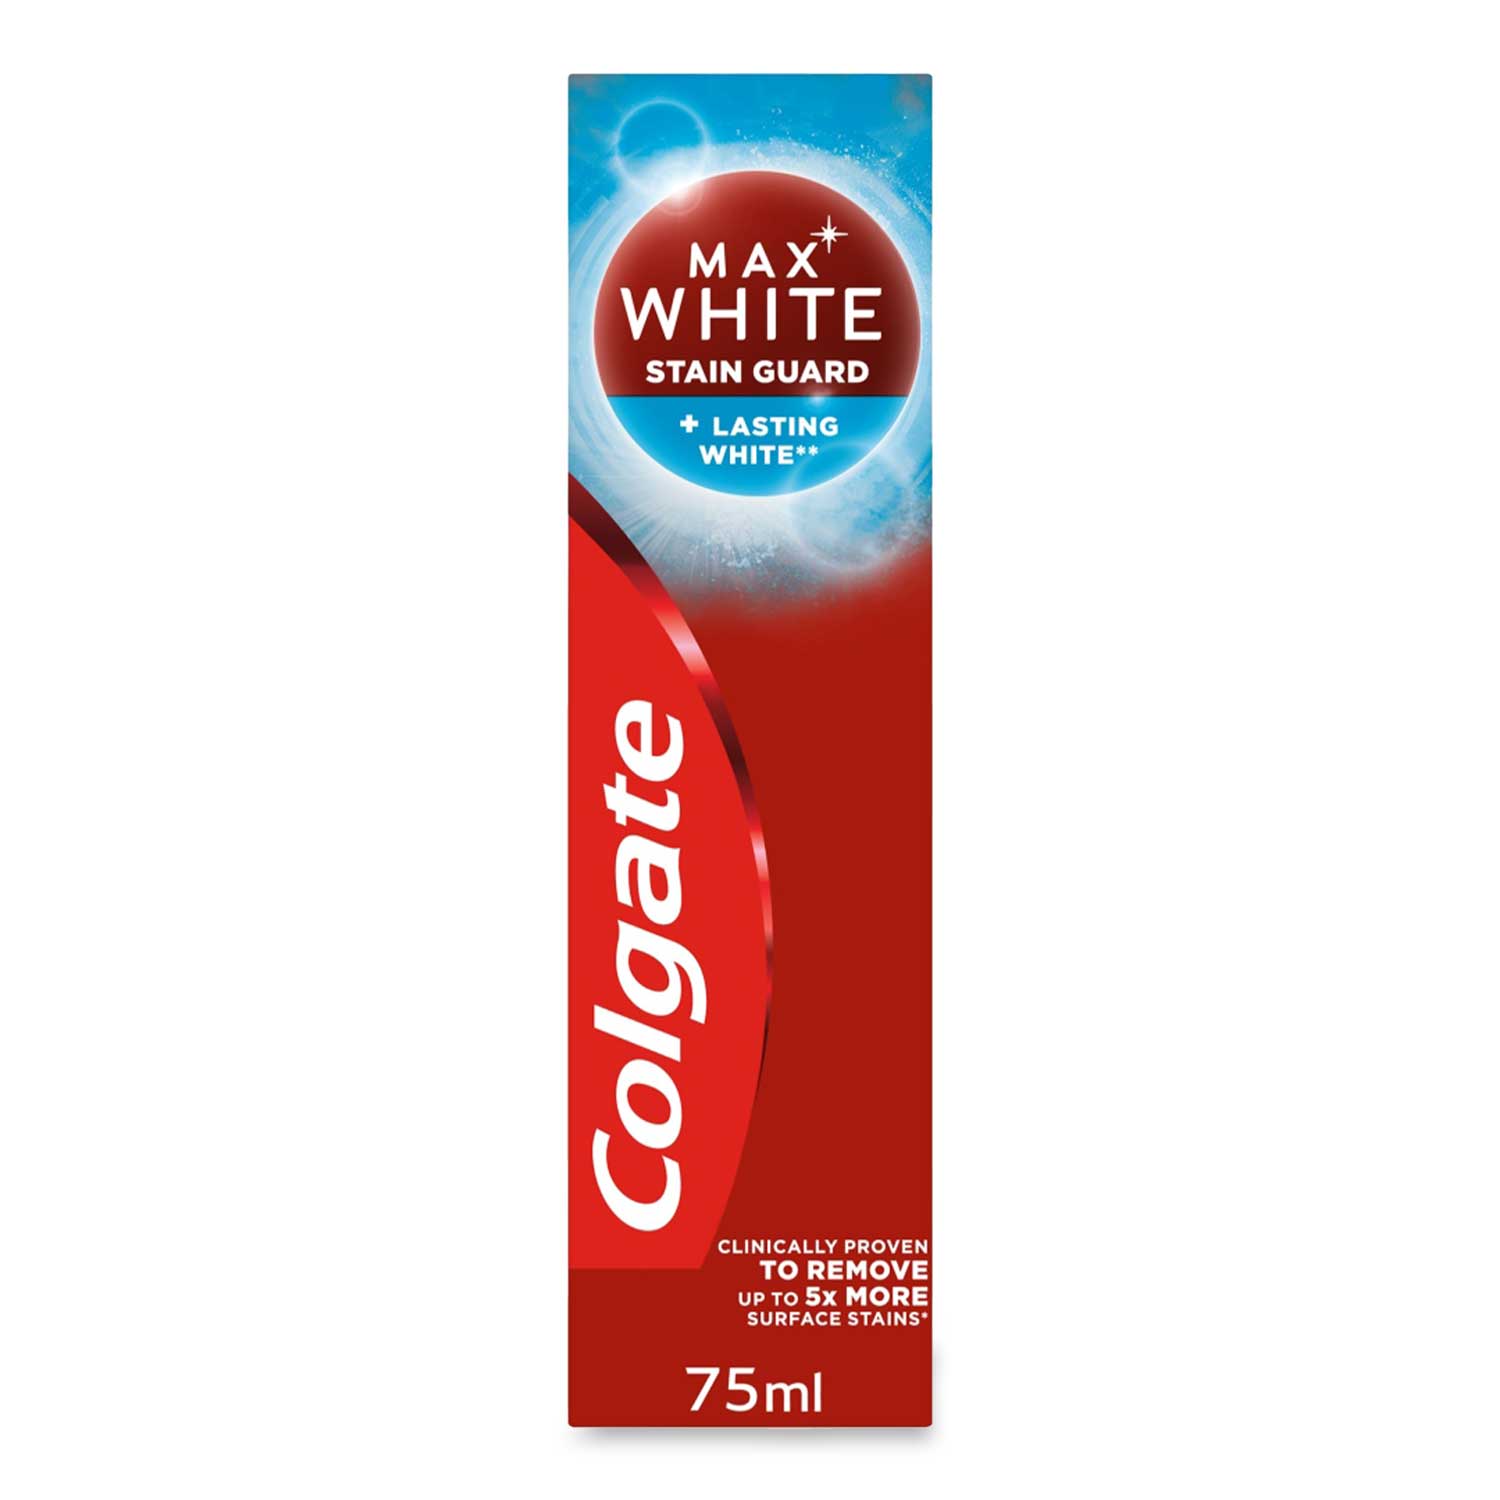 2X -Pasta Dental Colgate Max White Crystal Mint 131 ML